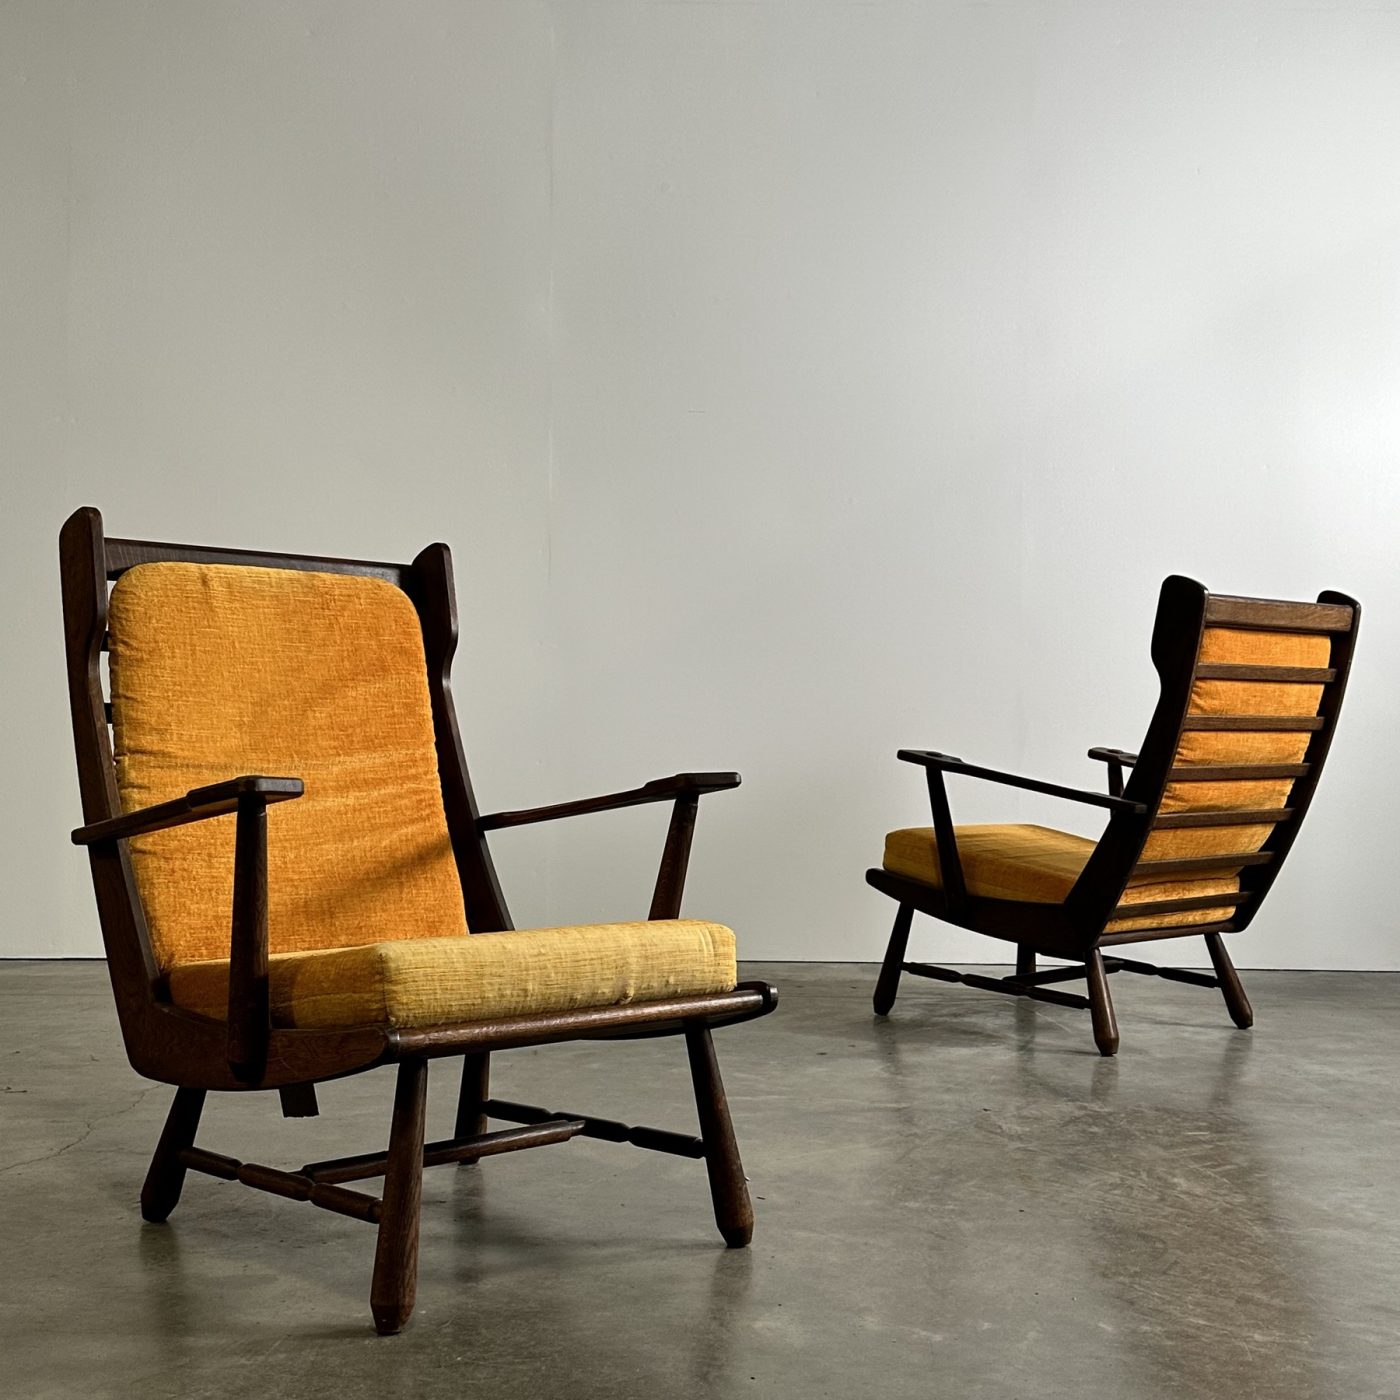 objet-vagabond-midcentury-armchairs0000